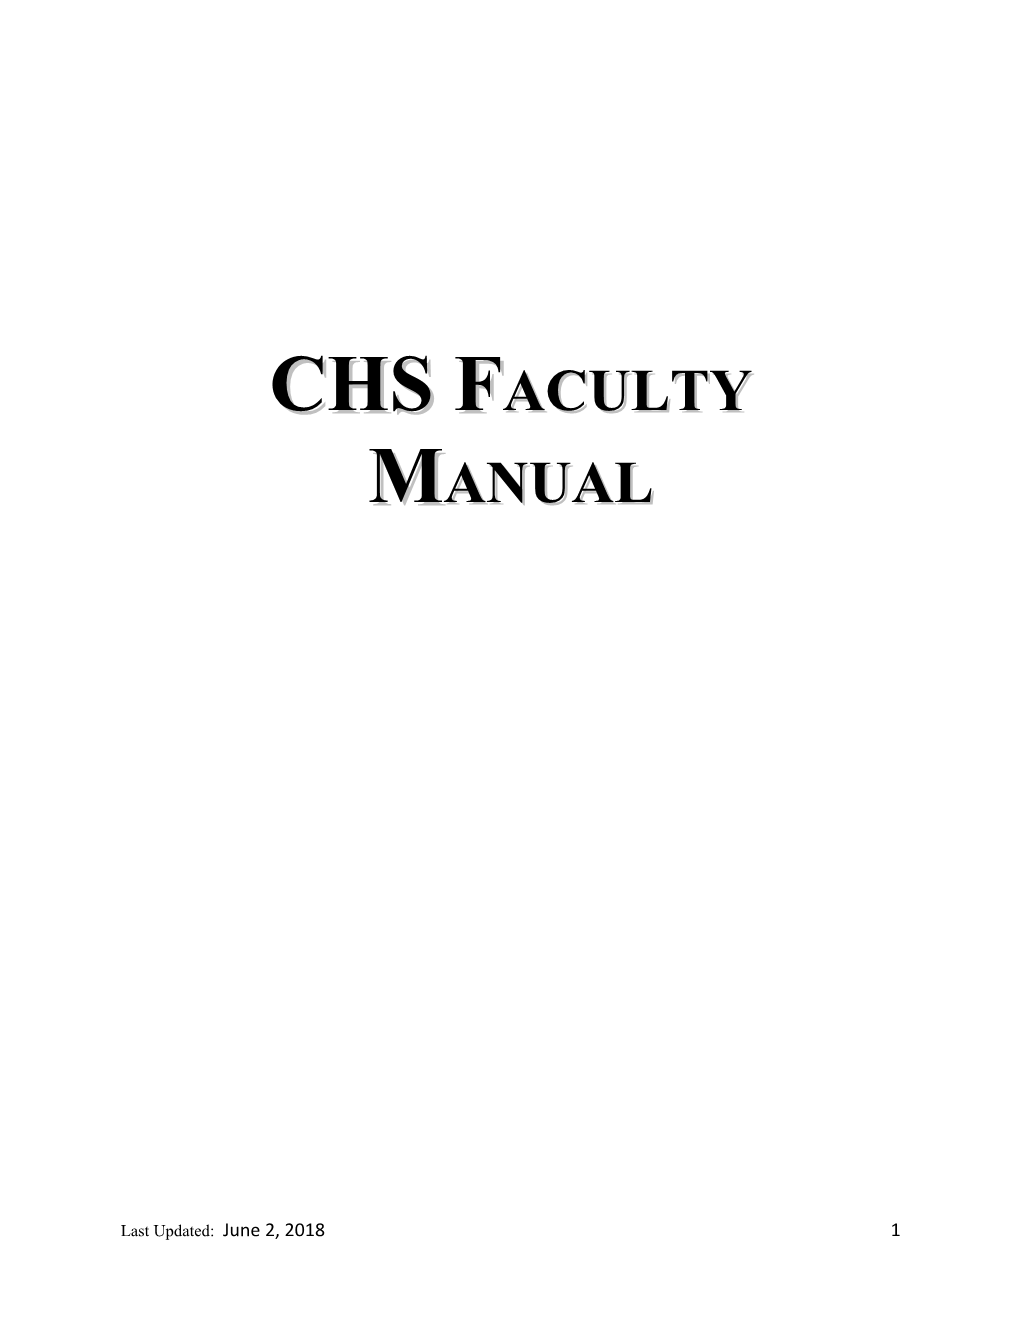 CHS Faculty Manual